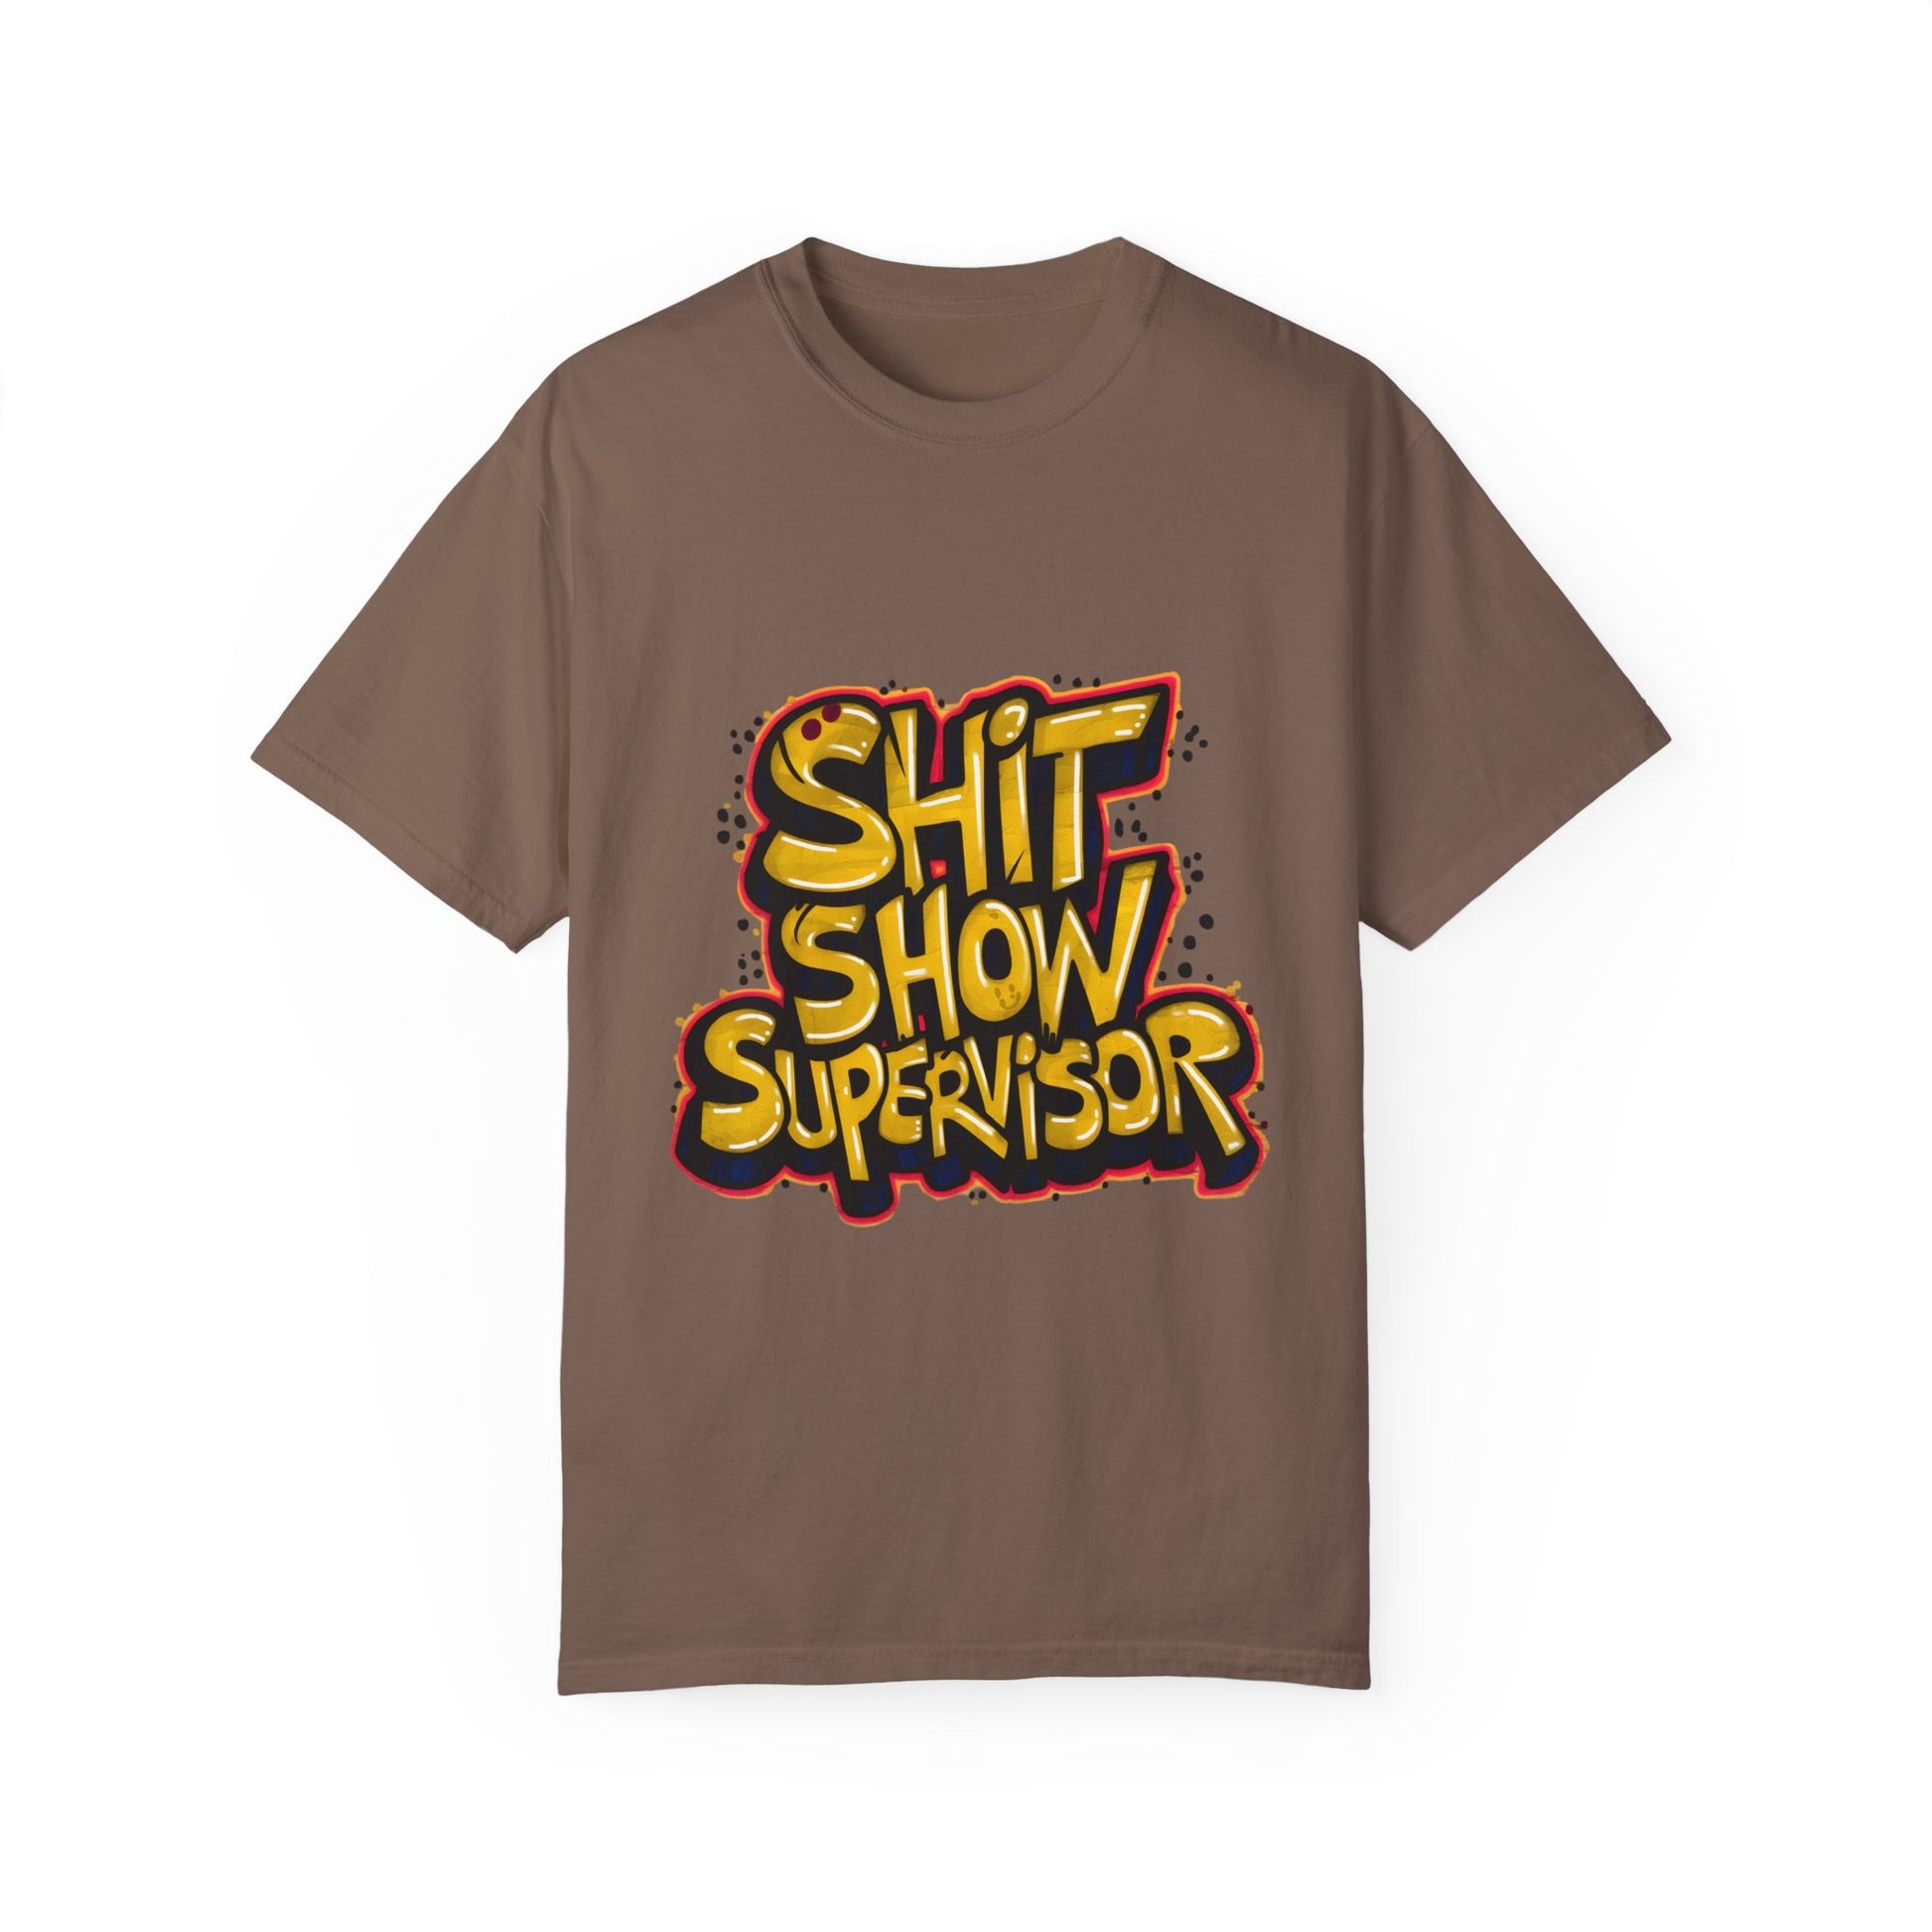 Shit Show Supervisor Urban Sarcastic Graphic Unisex Garment Dyed T-shirt Cotton Funny Humorous Graphic Soft Premium Unisex Men Women Espresso T-shirt Birthday Gift-15